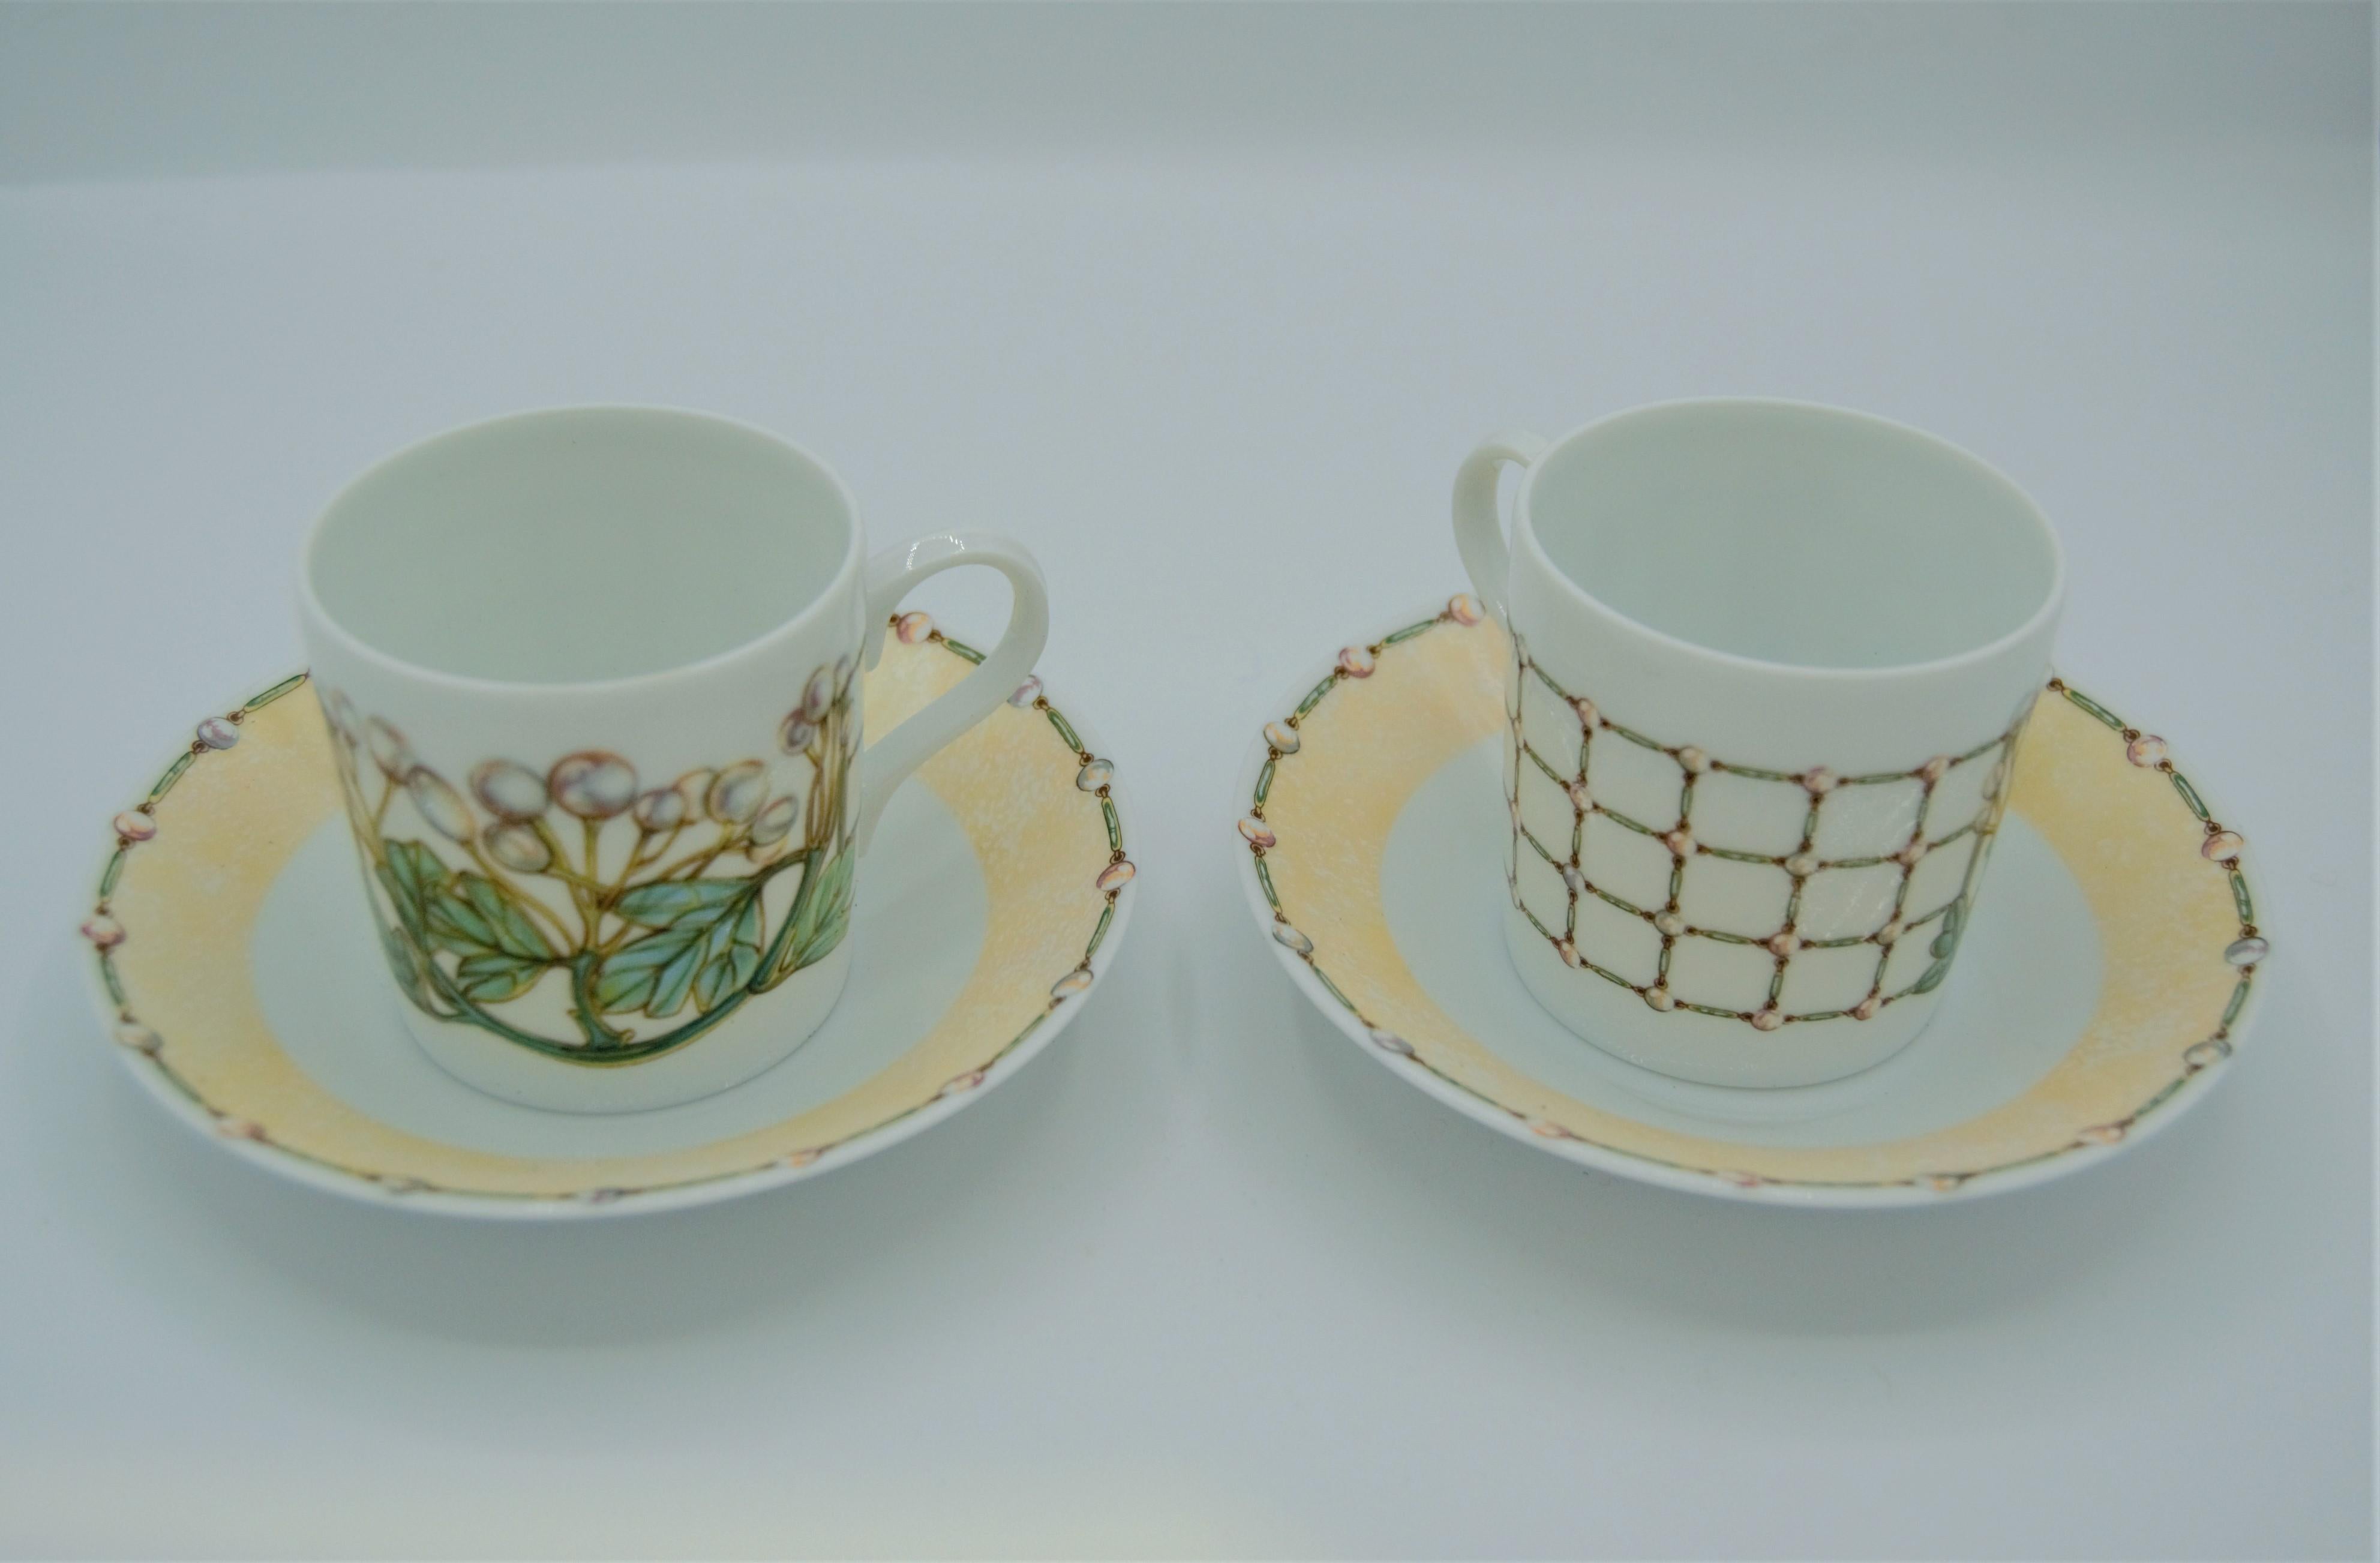 R. Lalique - Limoges porcelain

6 cups and saucers model 